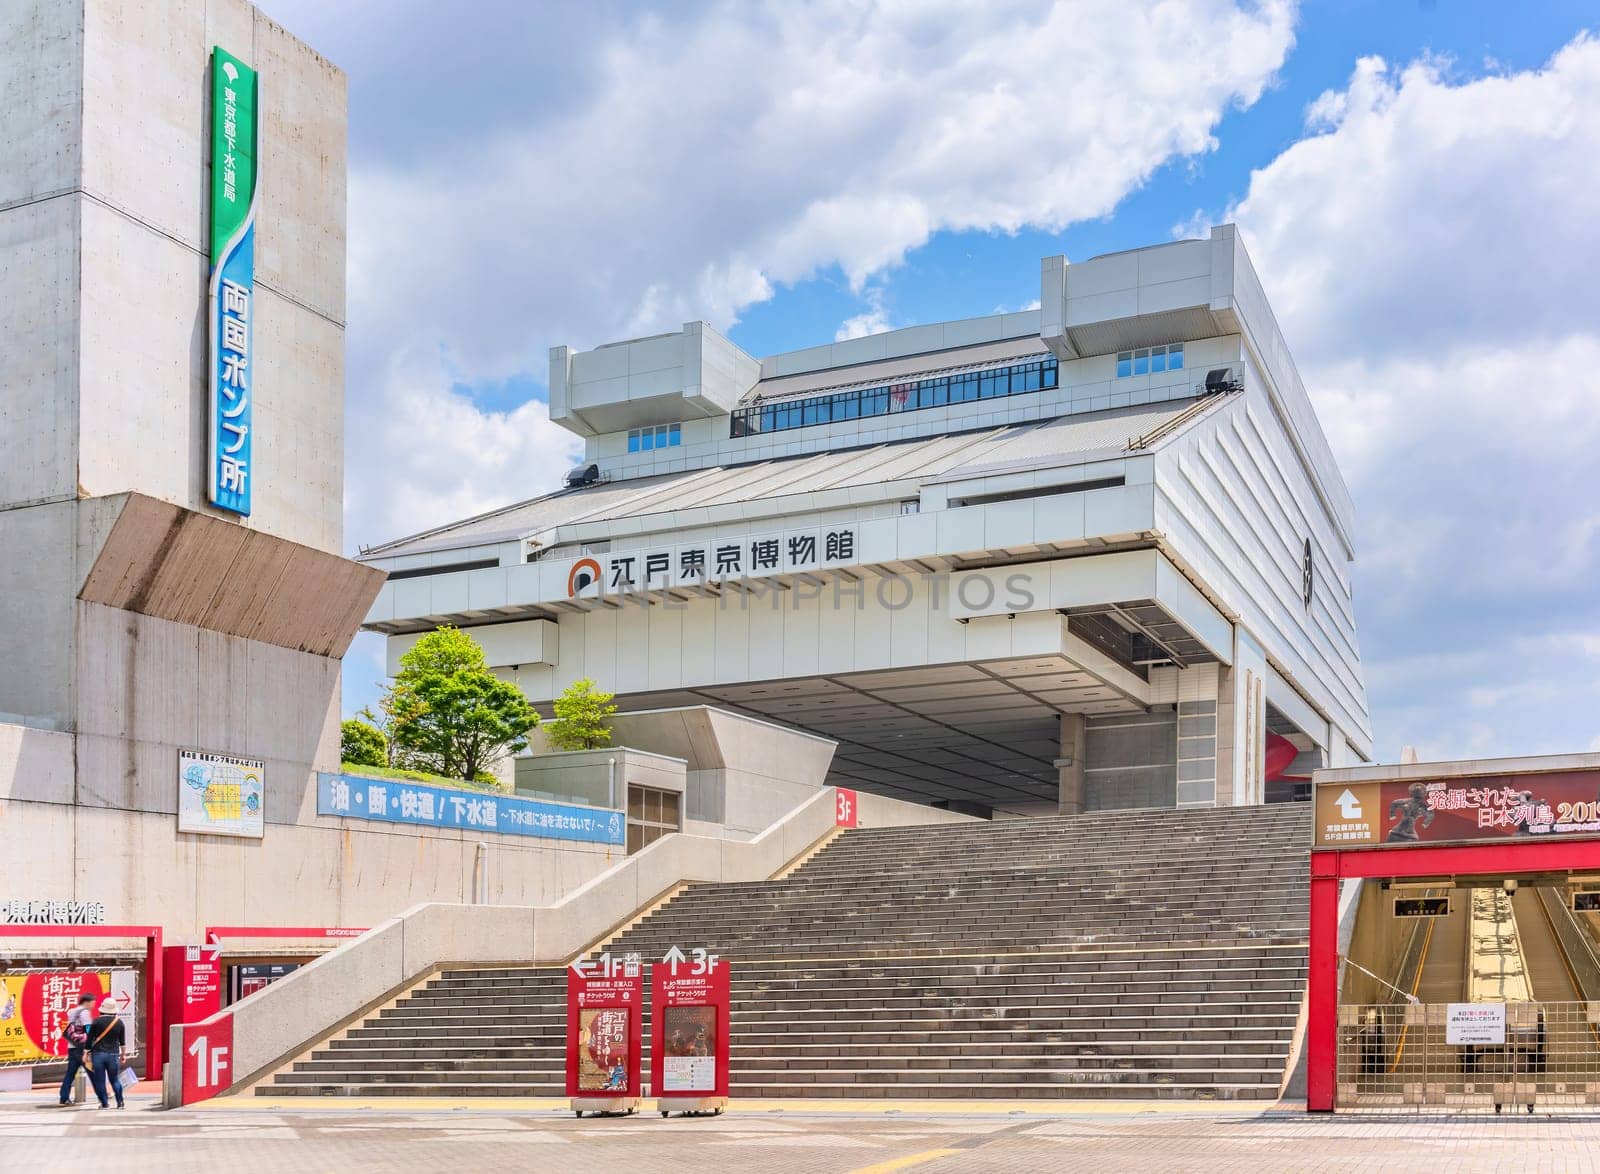 Edo-Tokyo Museum building created by Kiyonori Kikutake in 1993. by kuremo